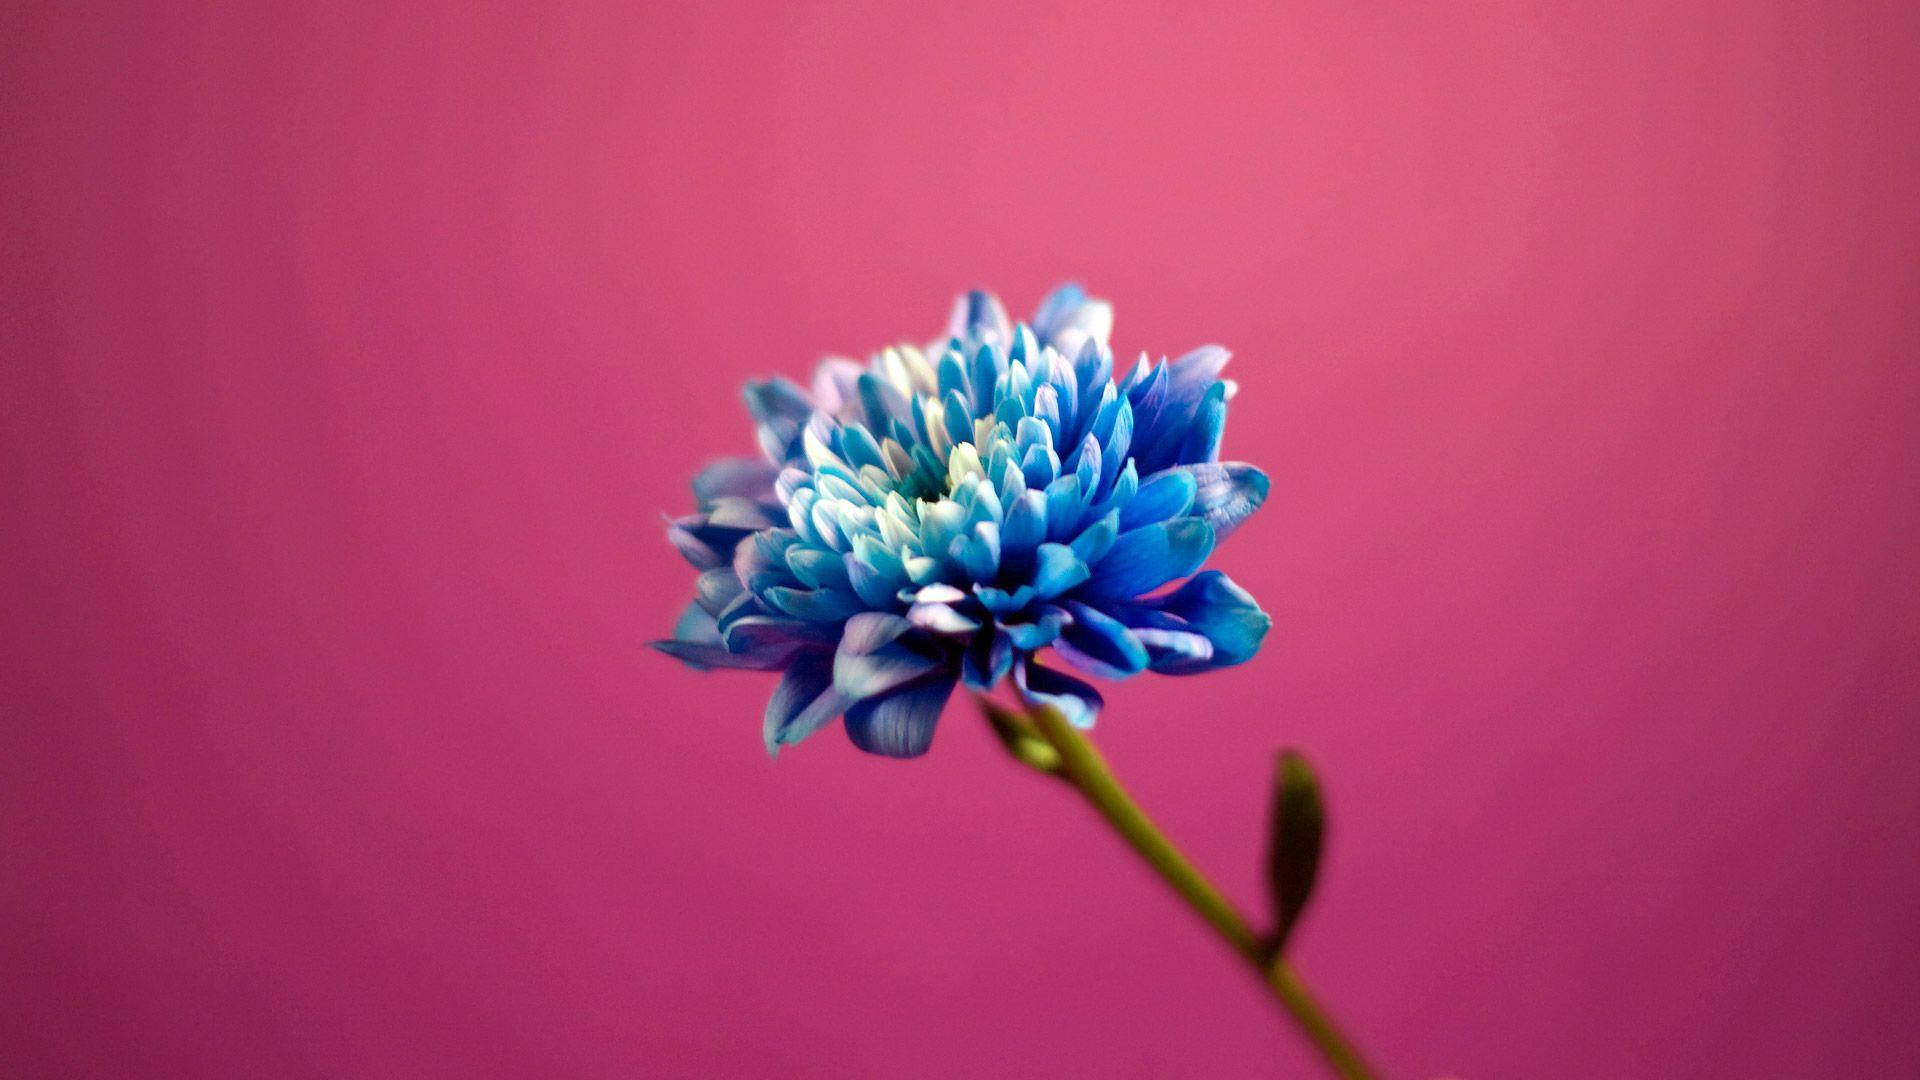 Blue Flower On Pink Background